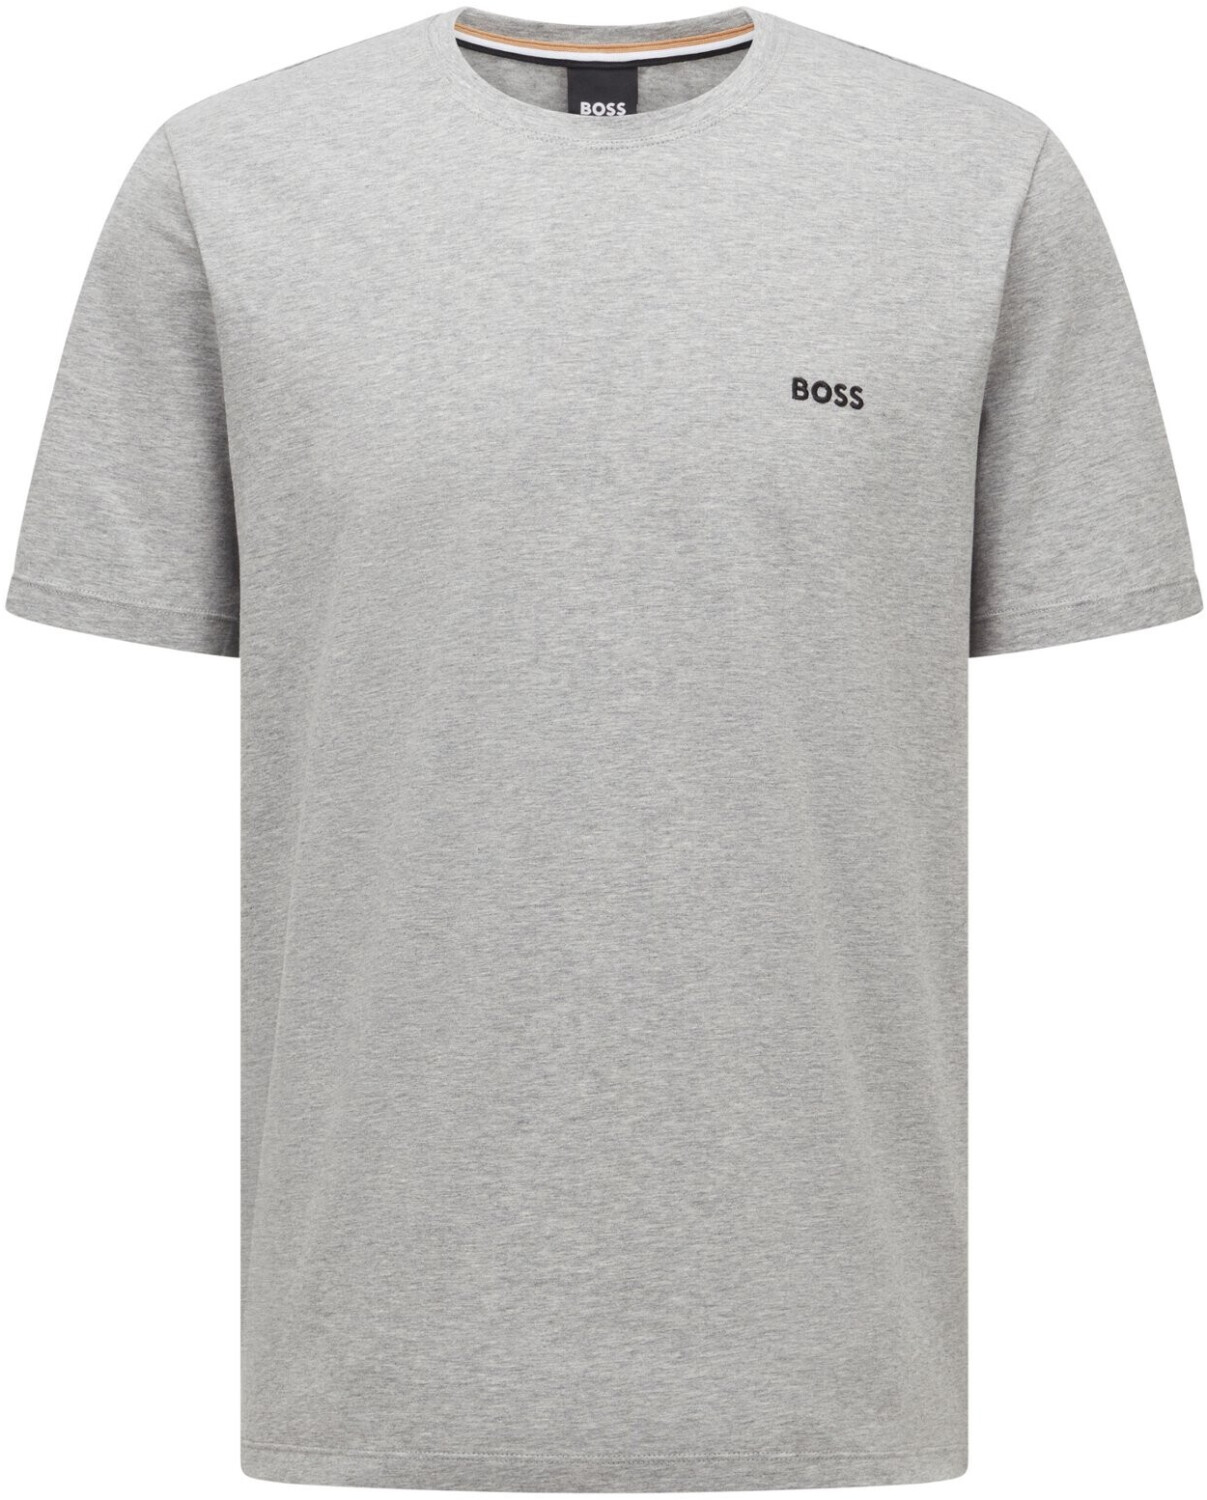 Hugo Boss Mix&Match T-Shirt R 50469550 ab 21,38 € | Preisvergleich bei